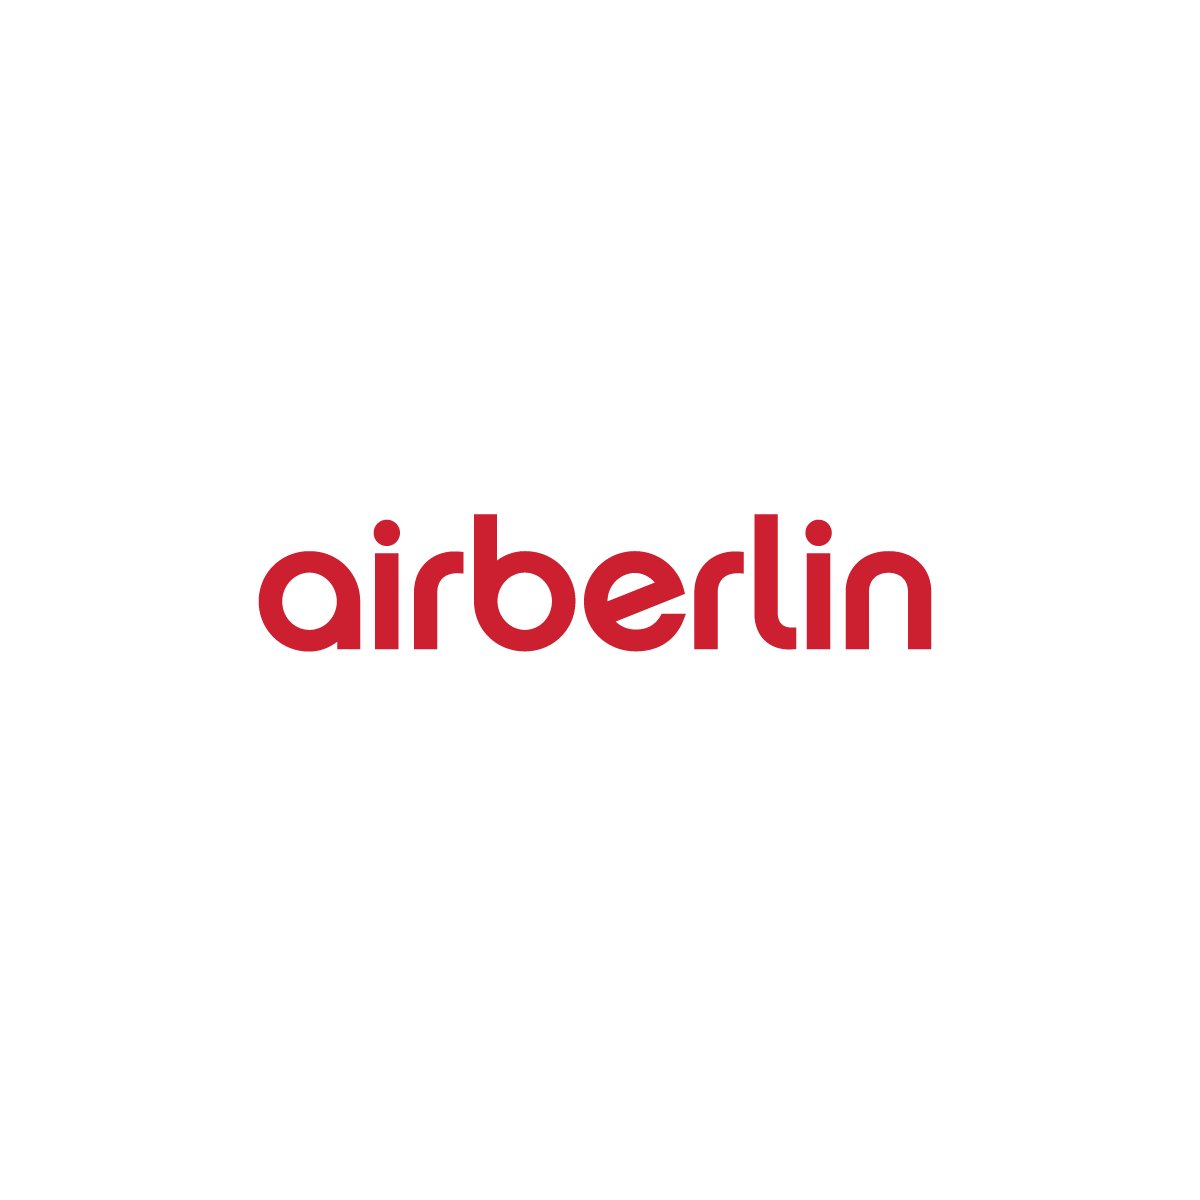 airberlin logo